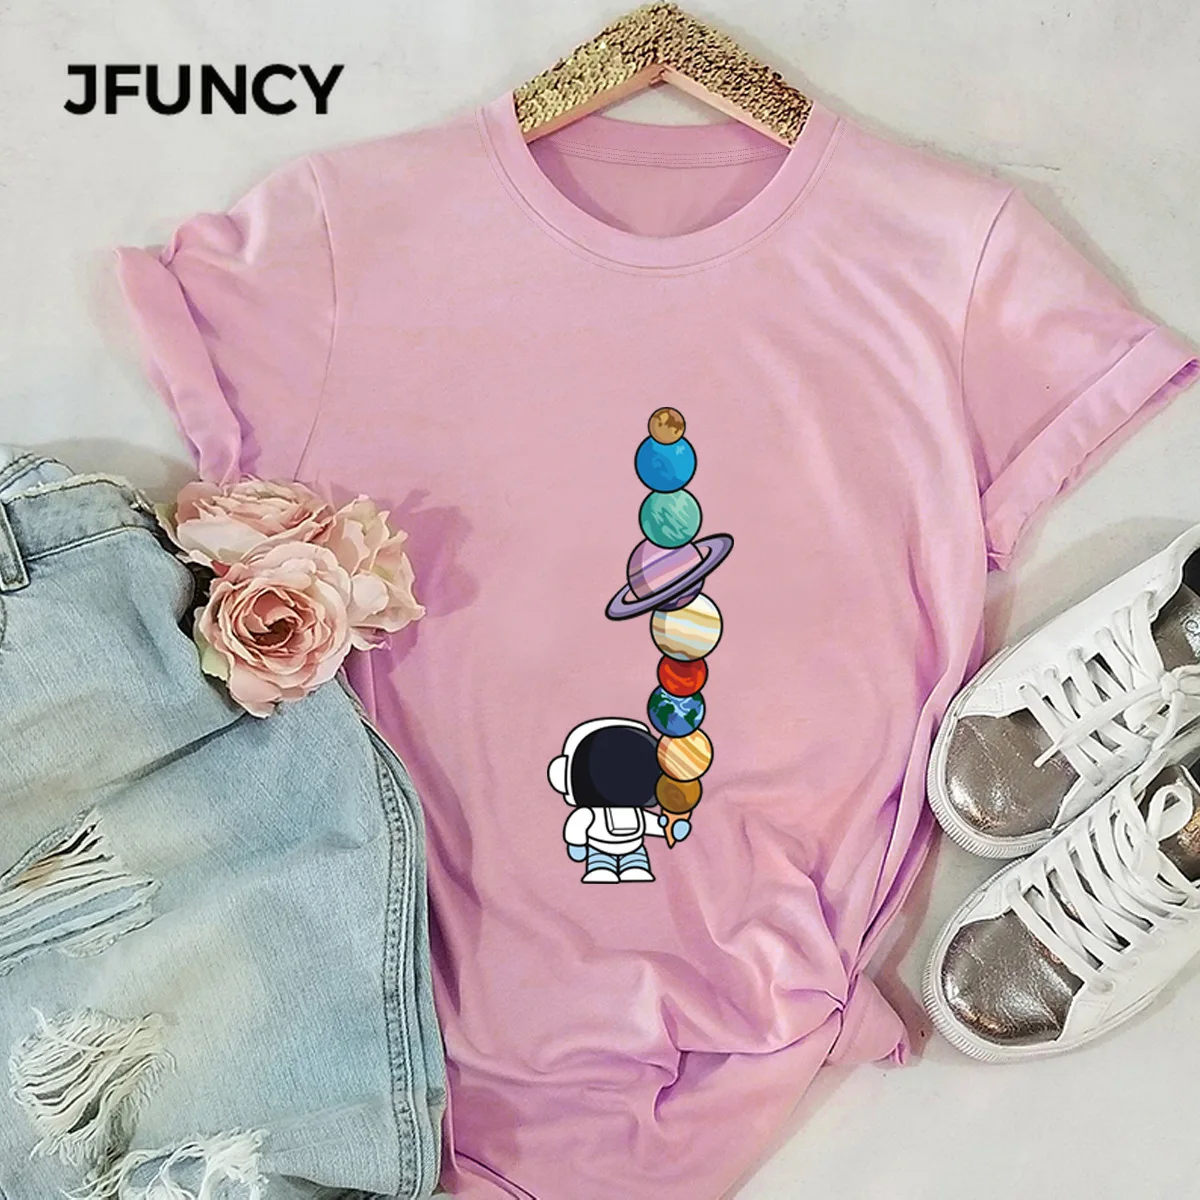 JFUNCY Lovely Planets Astronaut T-shirts Women Summer Cotton Tee Shirts Woman Short Sleeve Tops  S-5XL Casual T Shirt